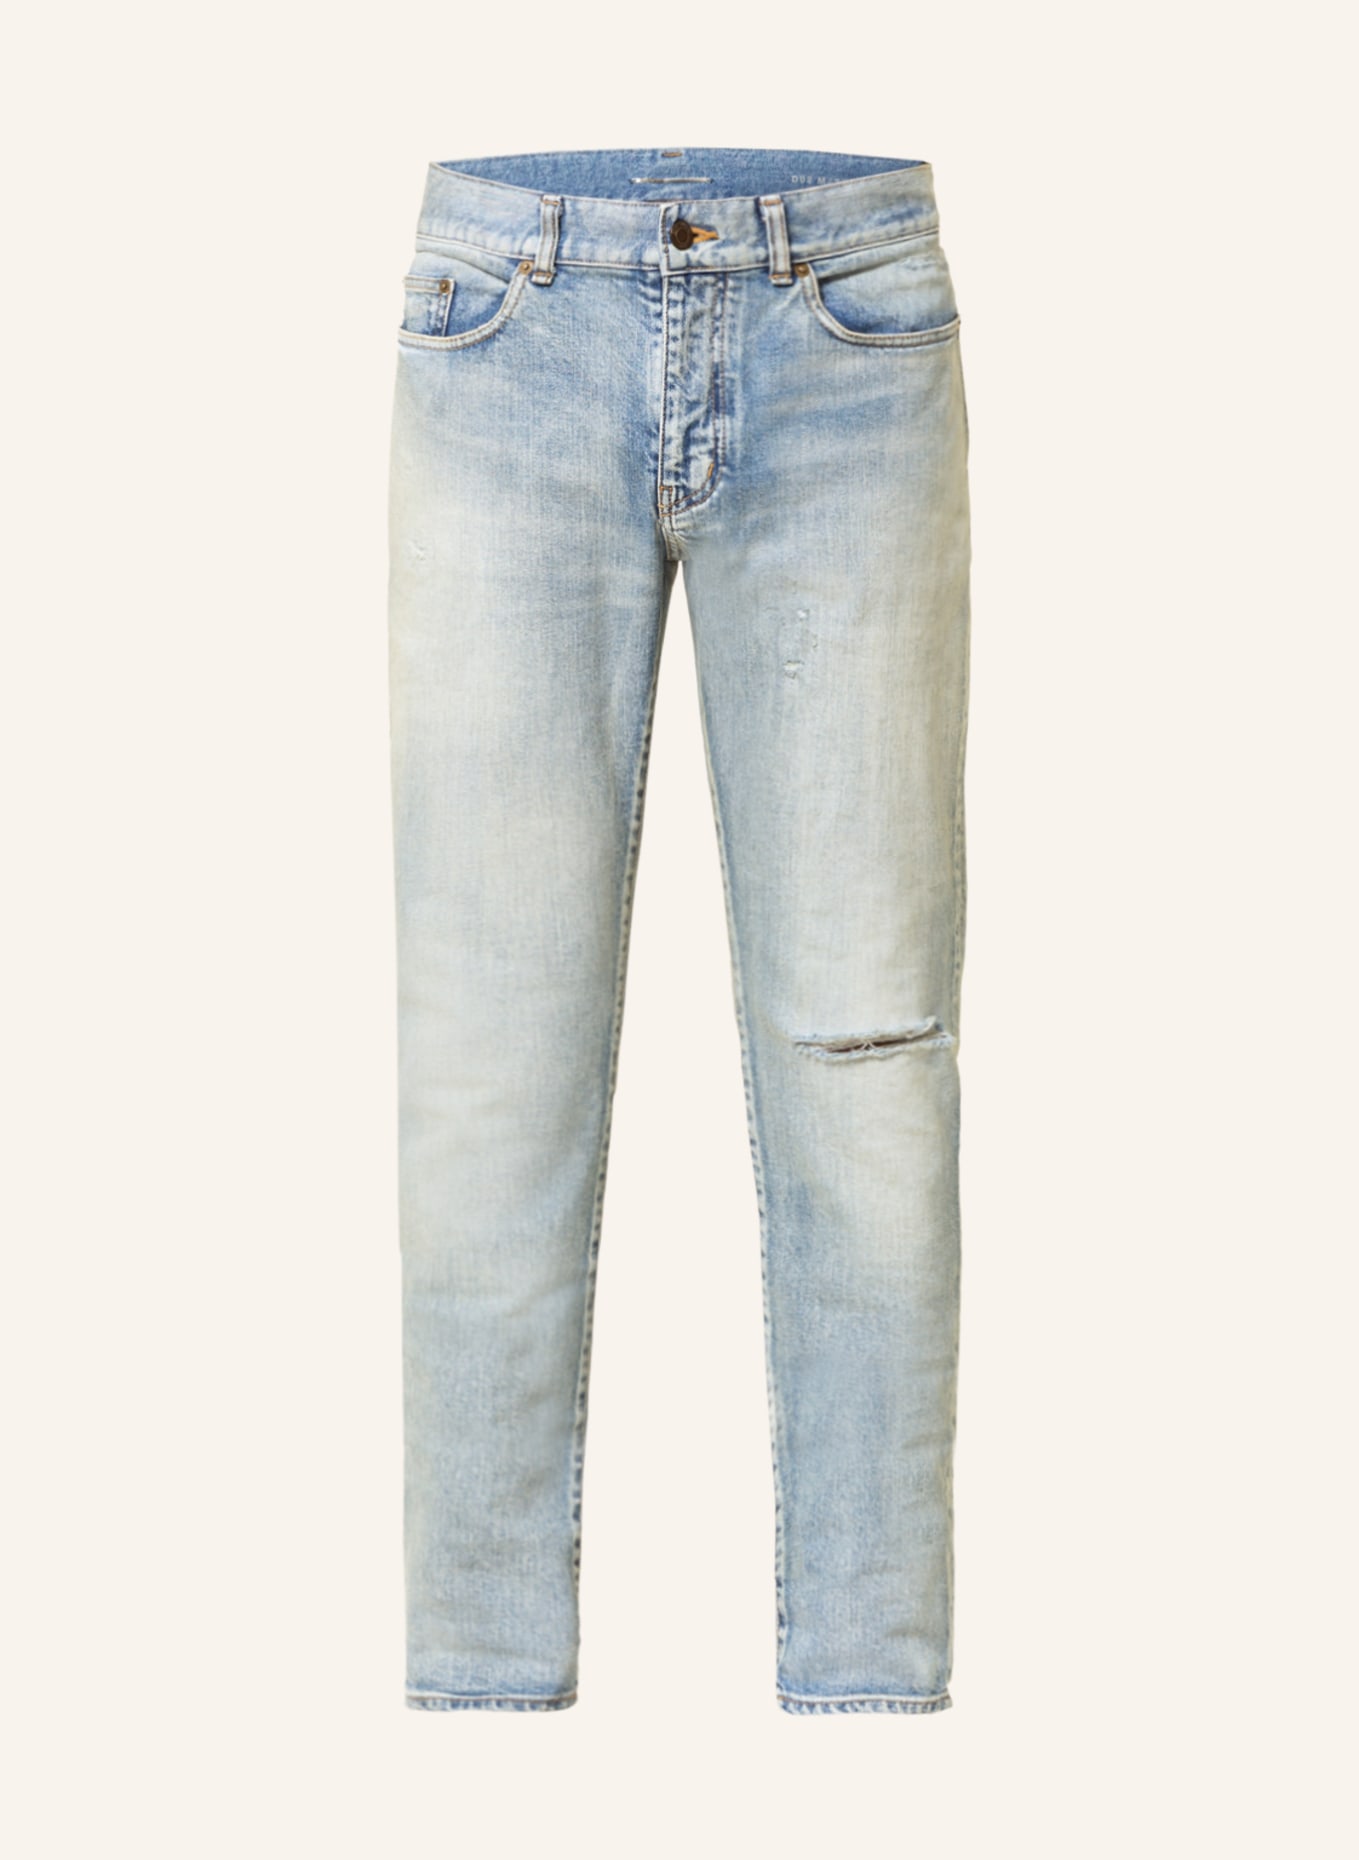 SAINT LAURENT Jeans Skinny Fit, Farbe: 4568 SANTA MONICA BLUE (Bild 1)